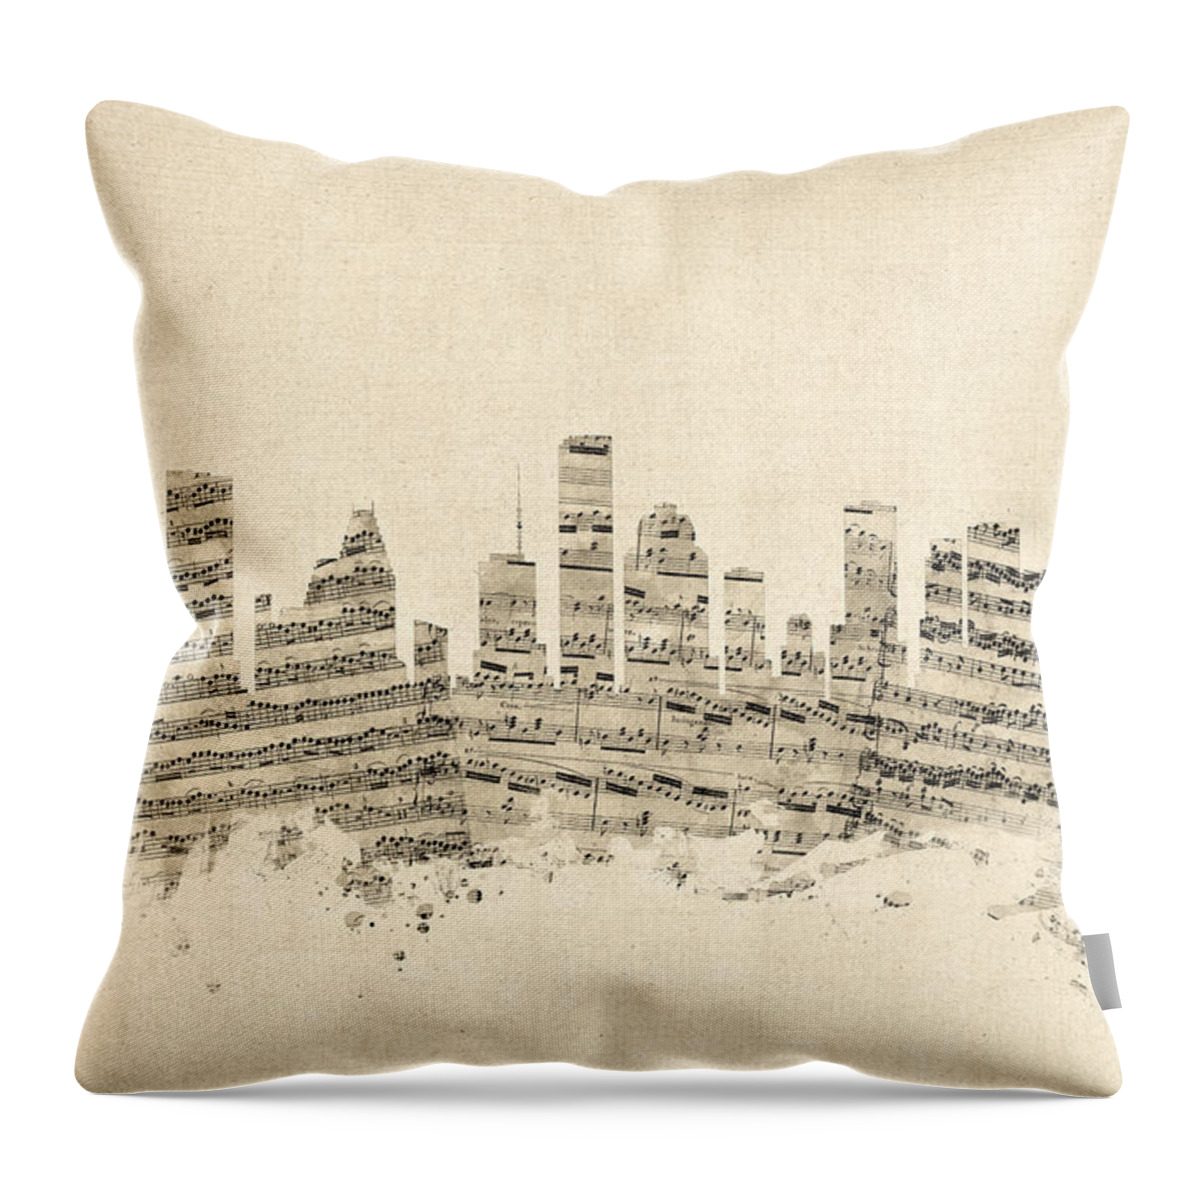 United States Throw Pillow featuring the digital art Houston Texas Skyline Sheet Music Cityscape by Michael Tompsett